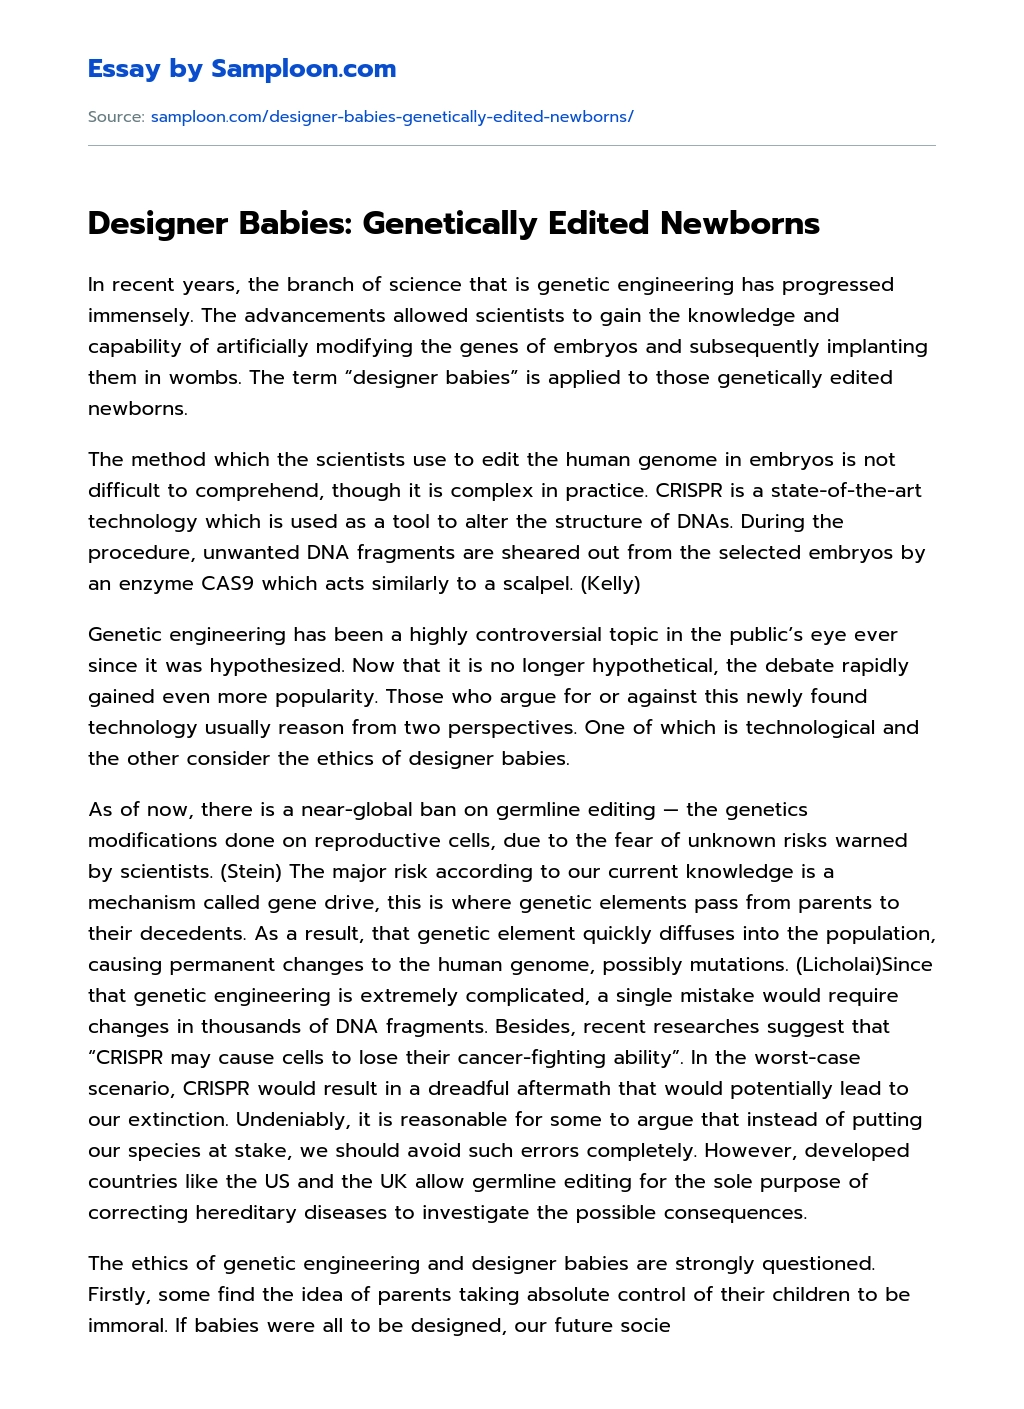 Designer Babies: Genetically Edited Newborns essay